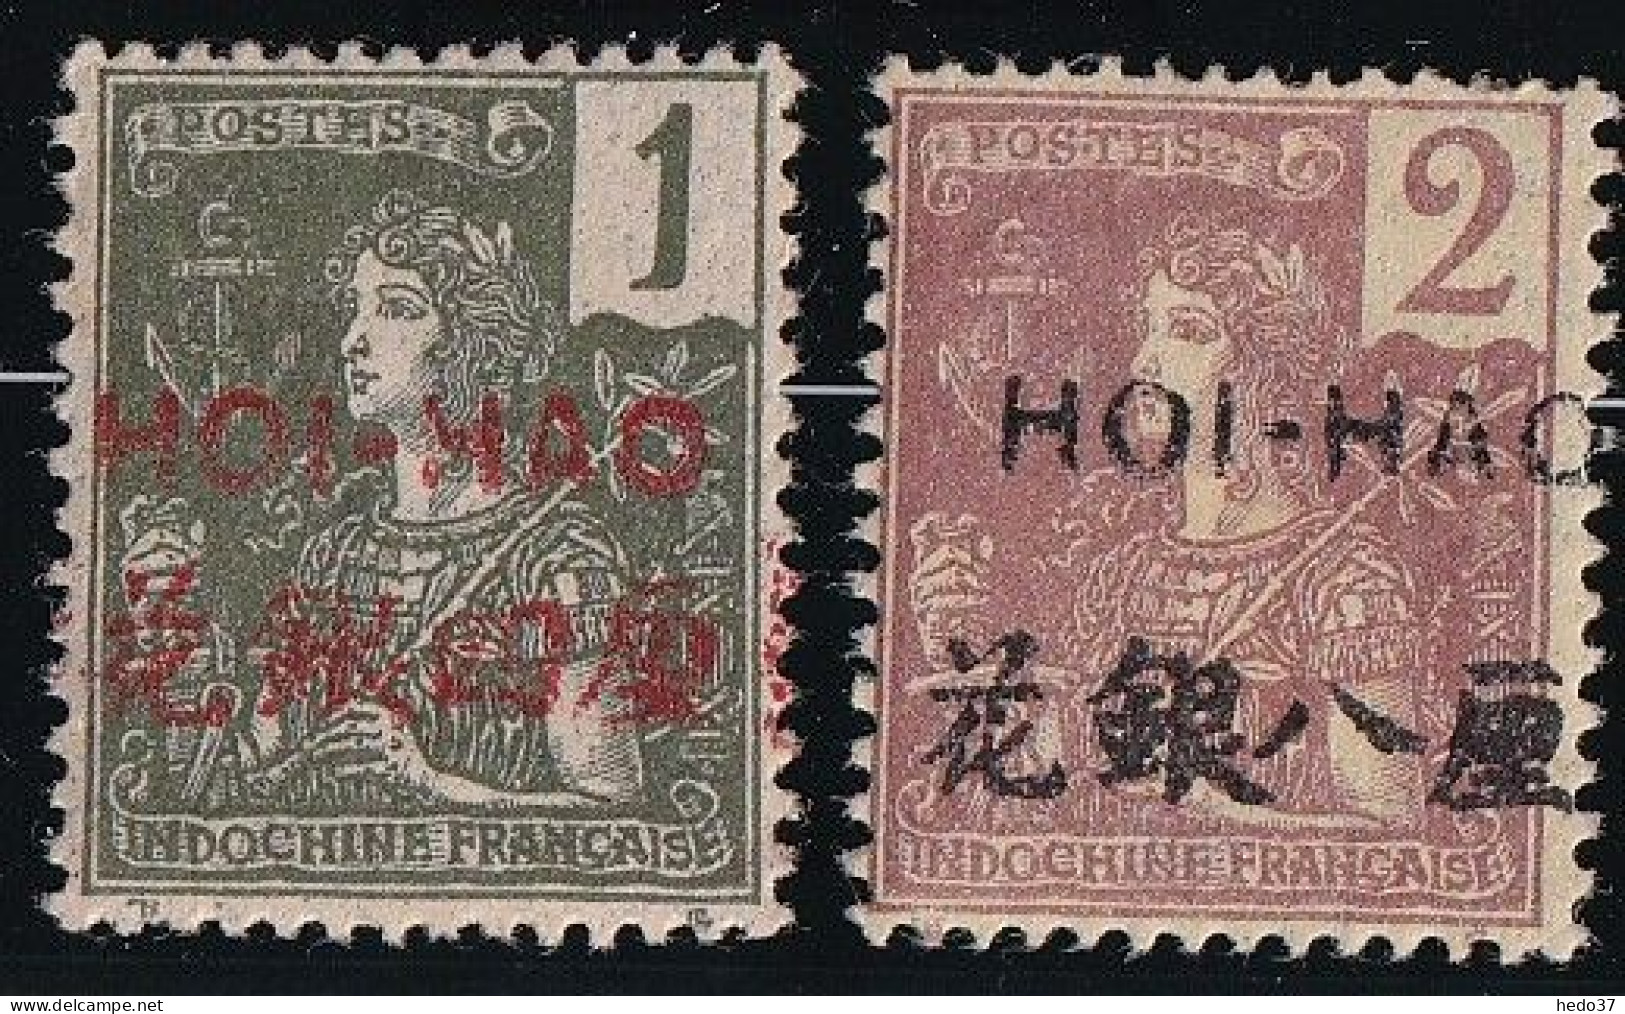 Hoï-Hao N°32/33 - Neuf * Avec Charnière - TB - Unused Stamps